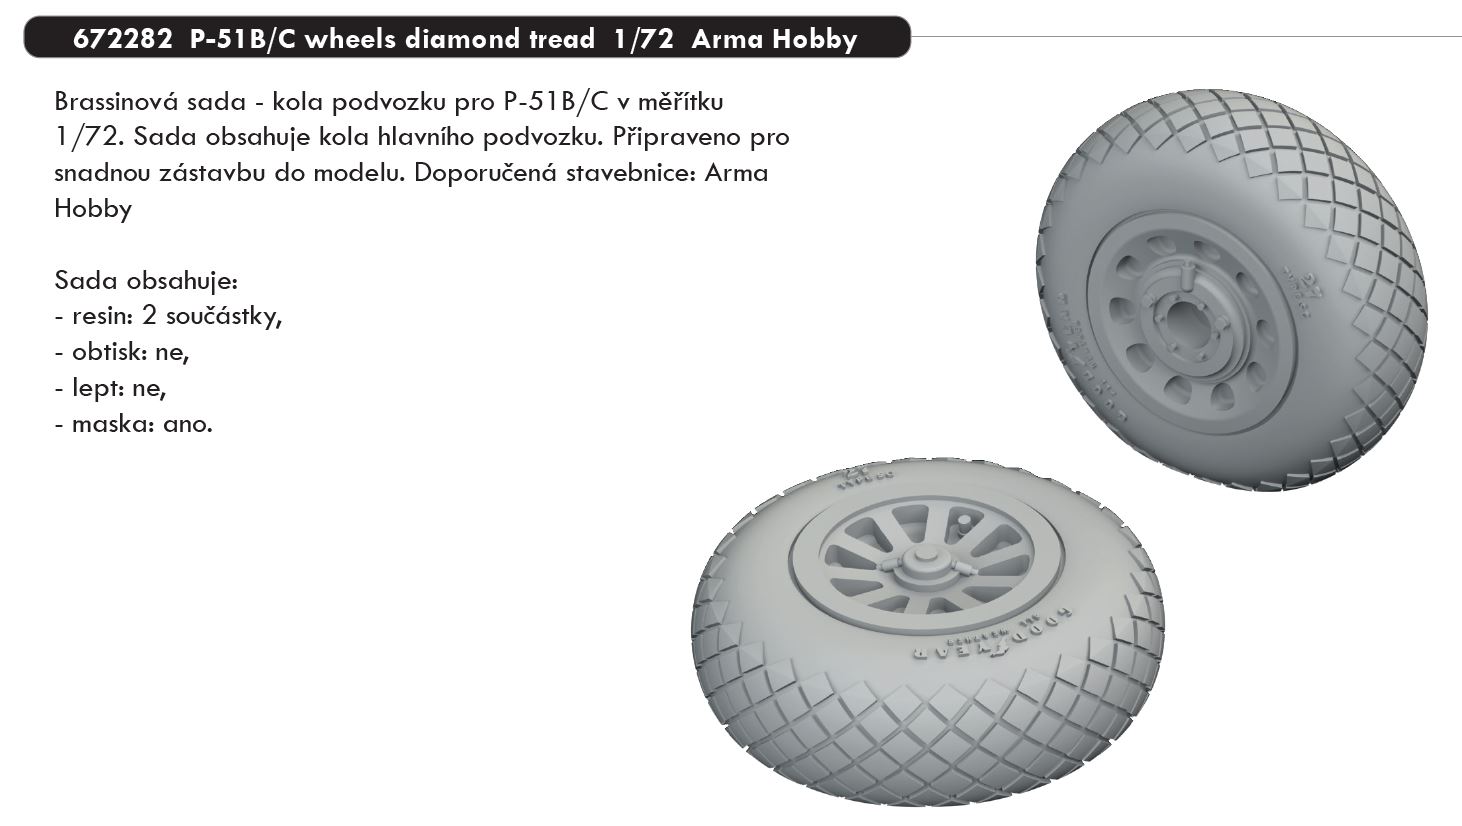 1/72 P-51B/C wheels diamond tread (ARMA HOBBY)